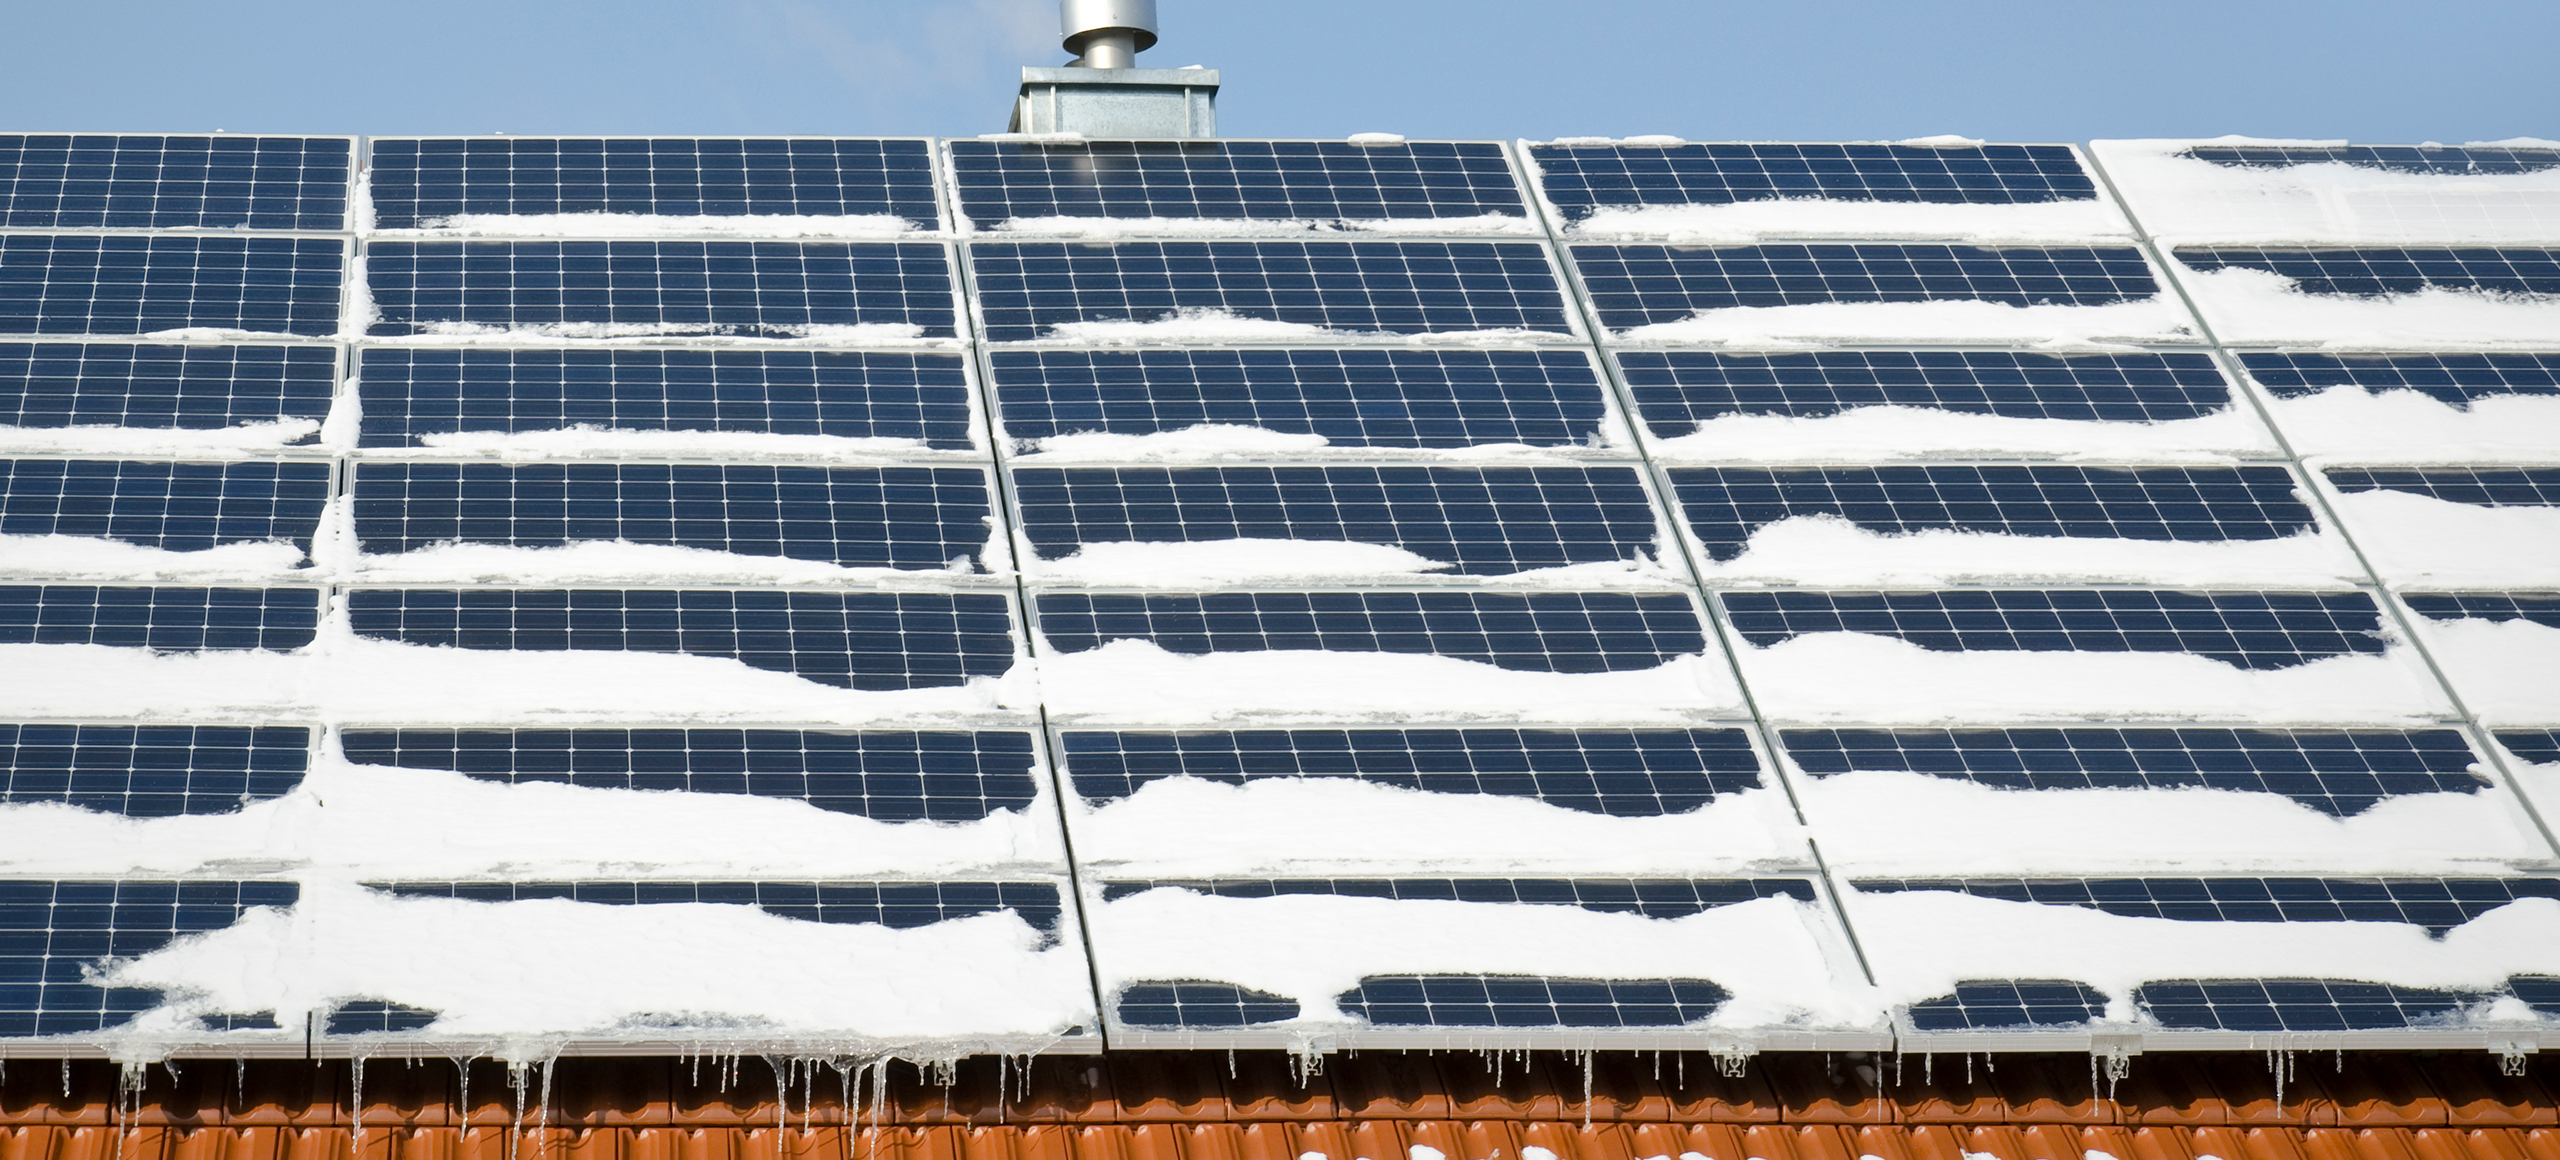 Blog Hero - How to Prepare Solar Panels for Winter